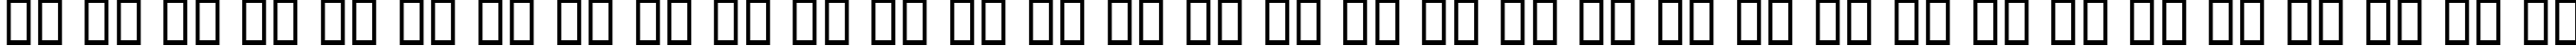 Пример написания русского алфавита шрифтом Bayern